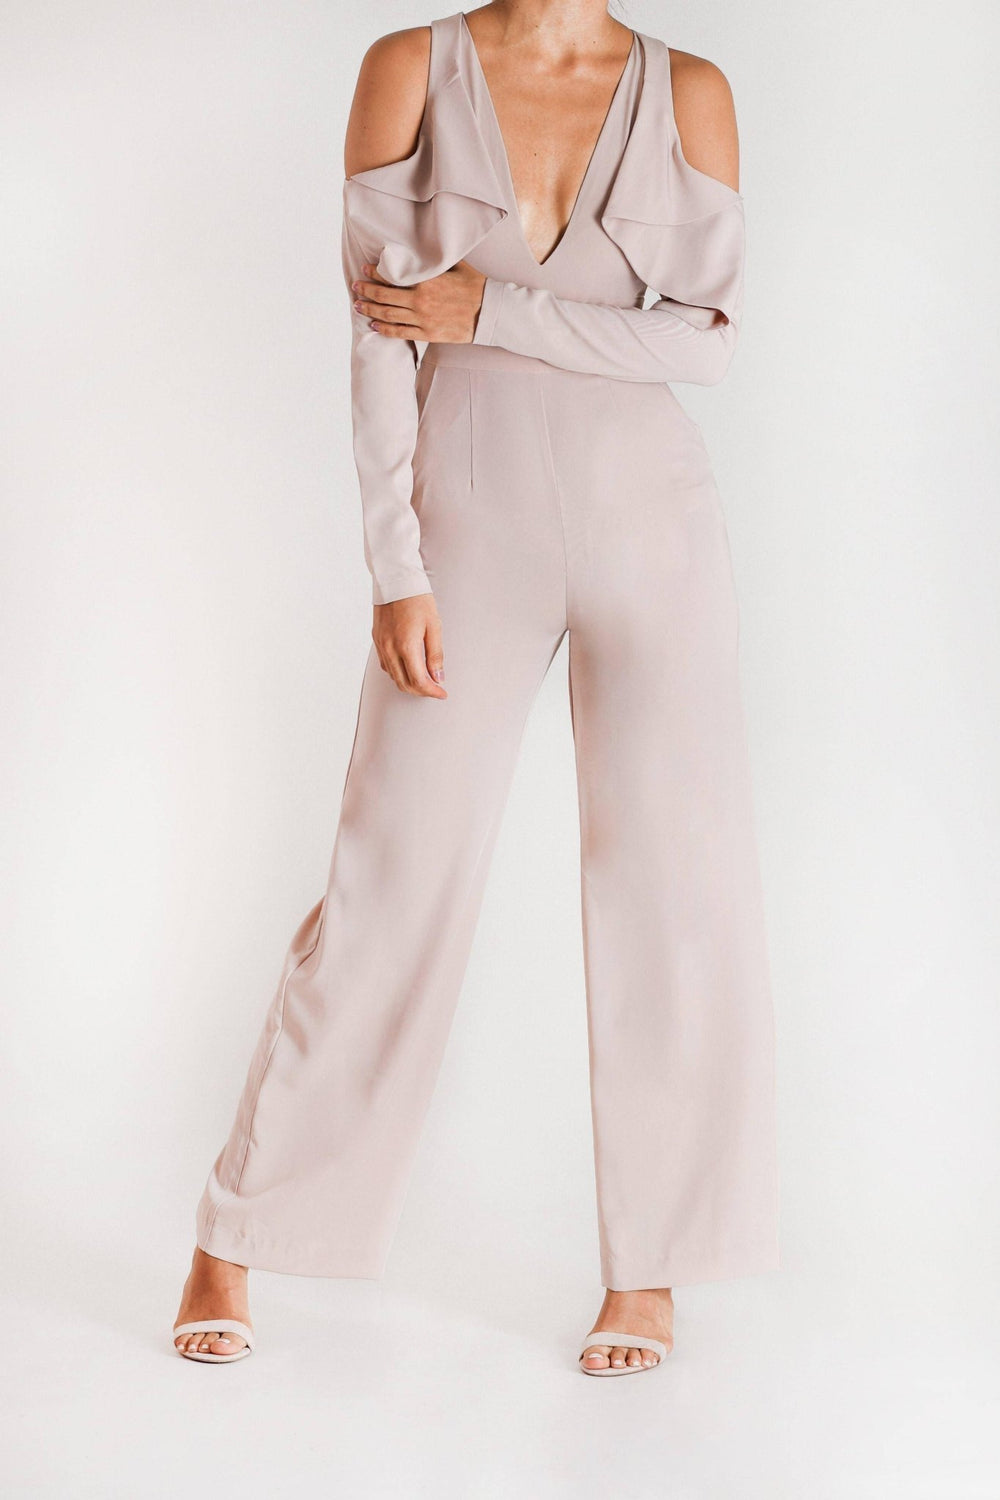 Lorena - jumpsuit beige - Lend the Trend renta de vestidos mexico